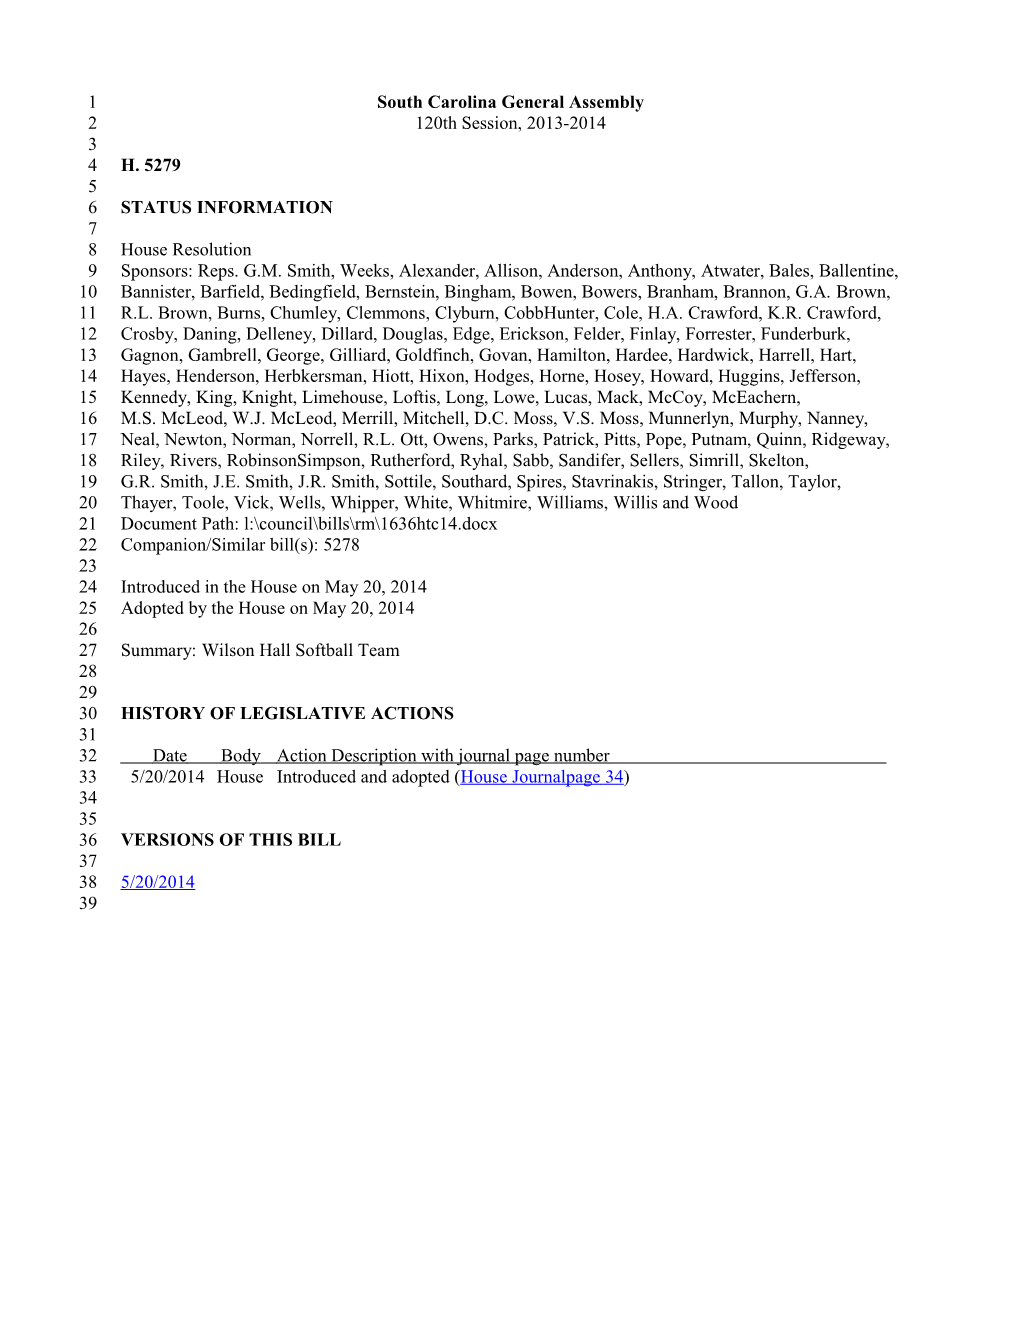 2013-2014 Bill 5279: Wilson Hall Softball Team - South Carolina Legislature Online